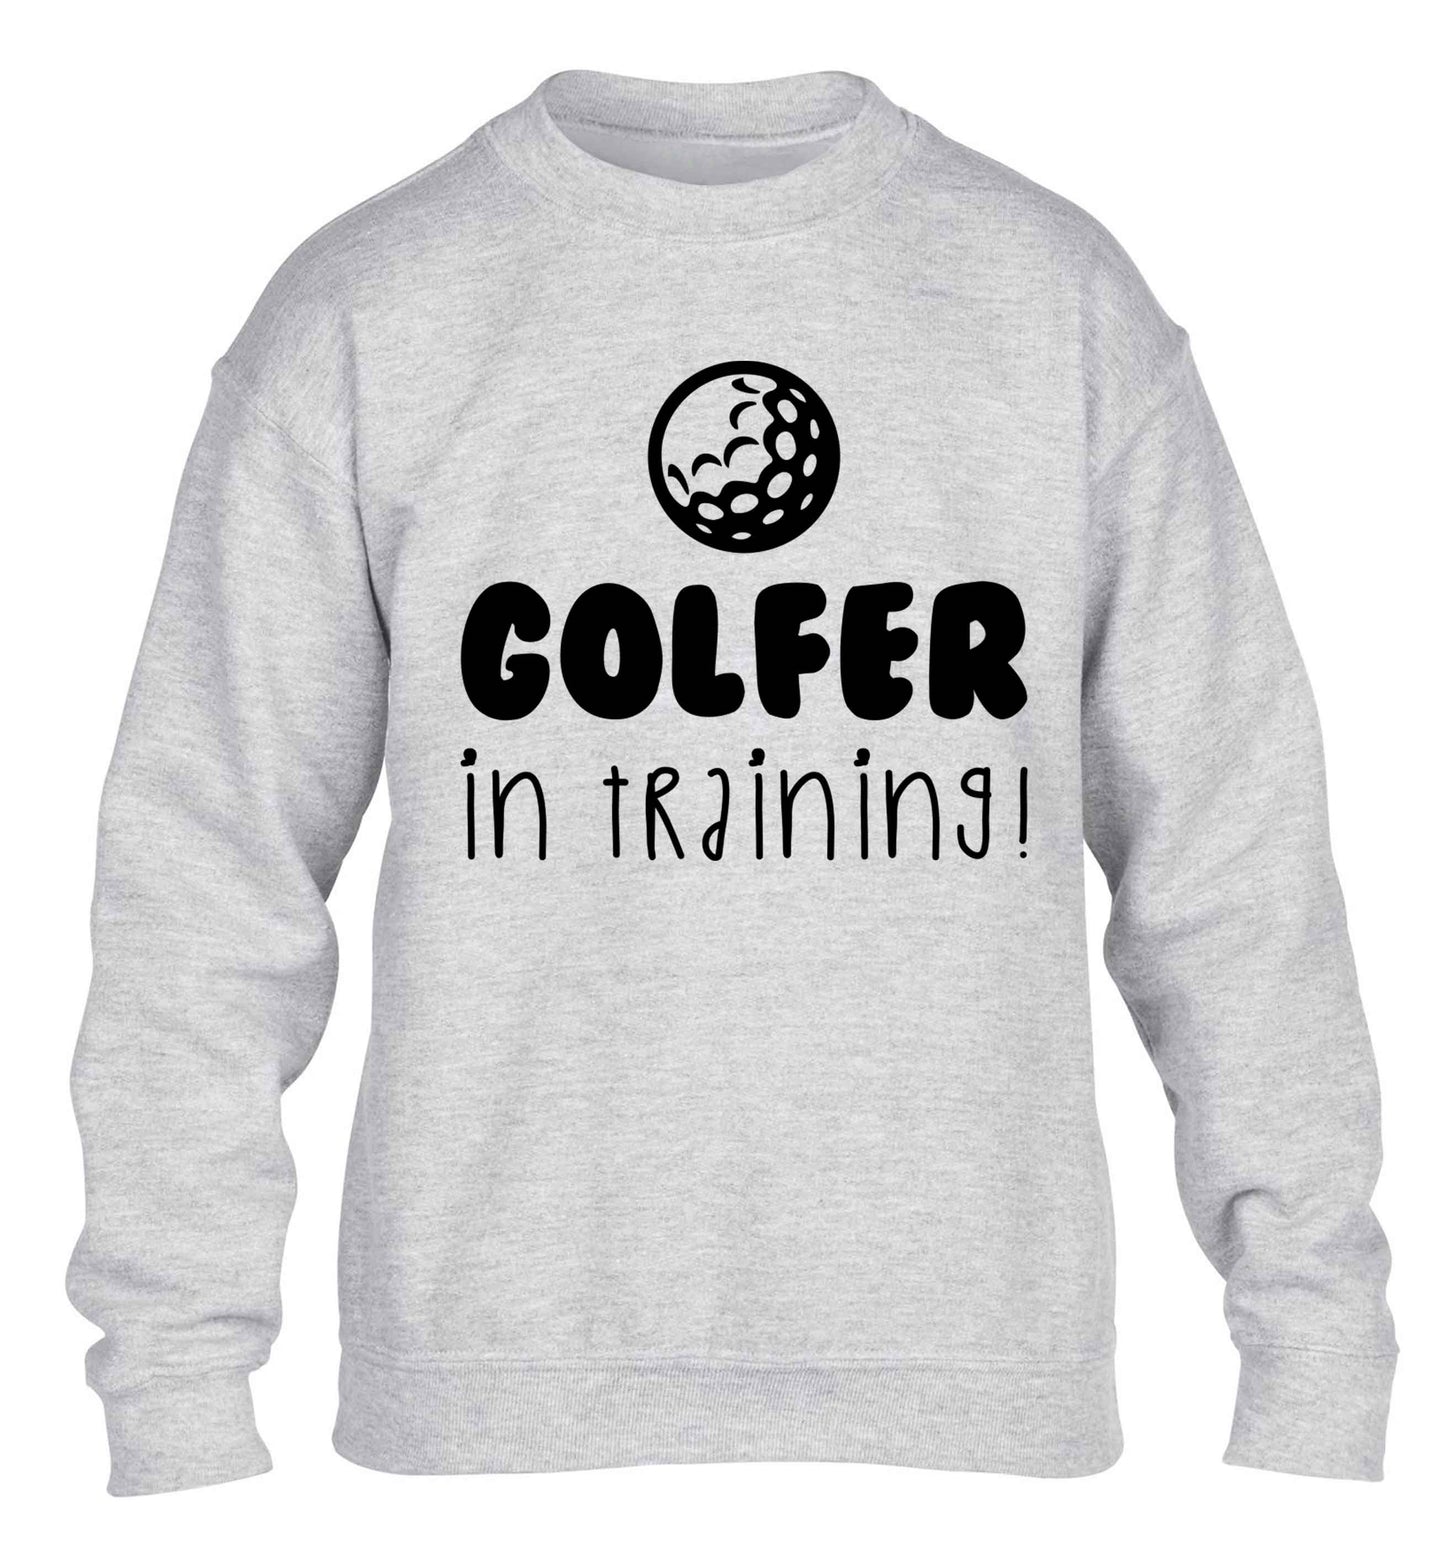 Golfer in training children's grey sweater 12-13 Years